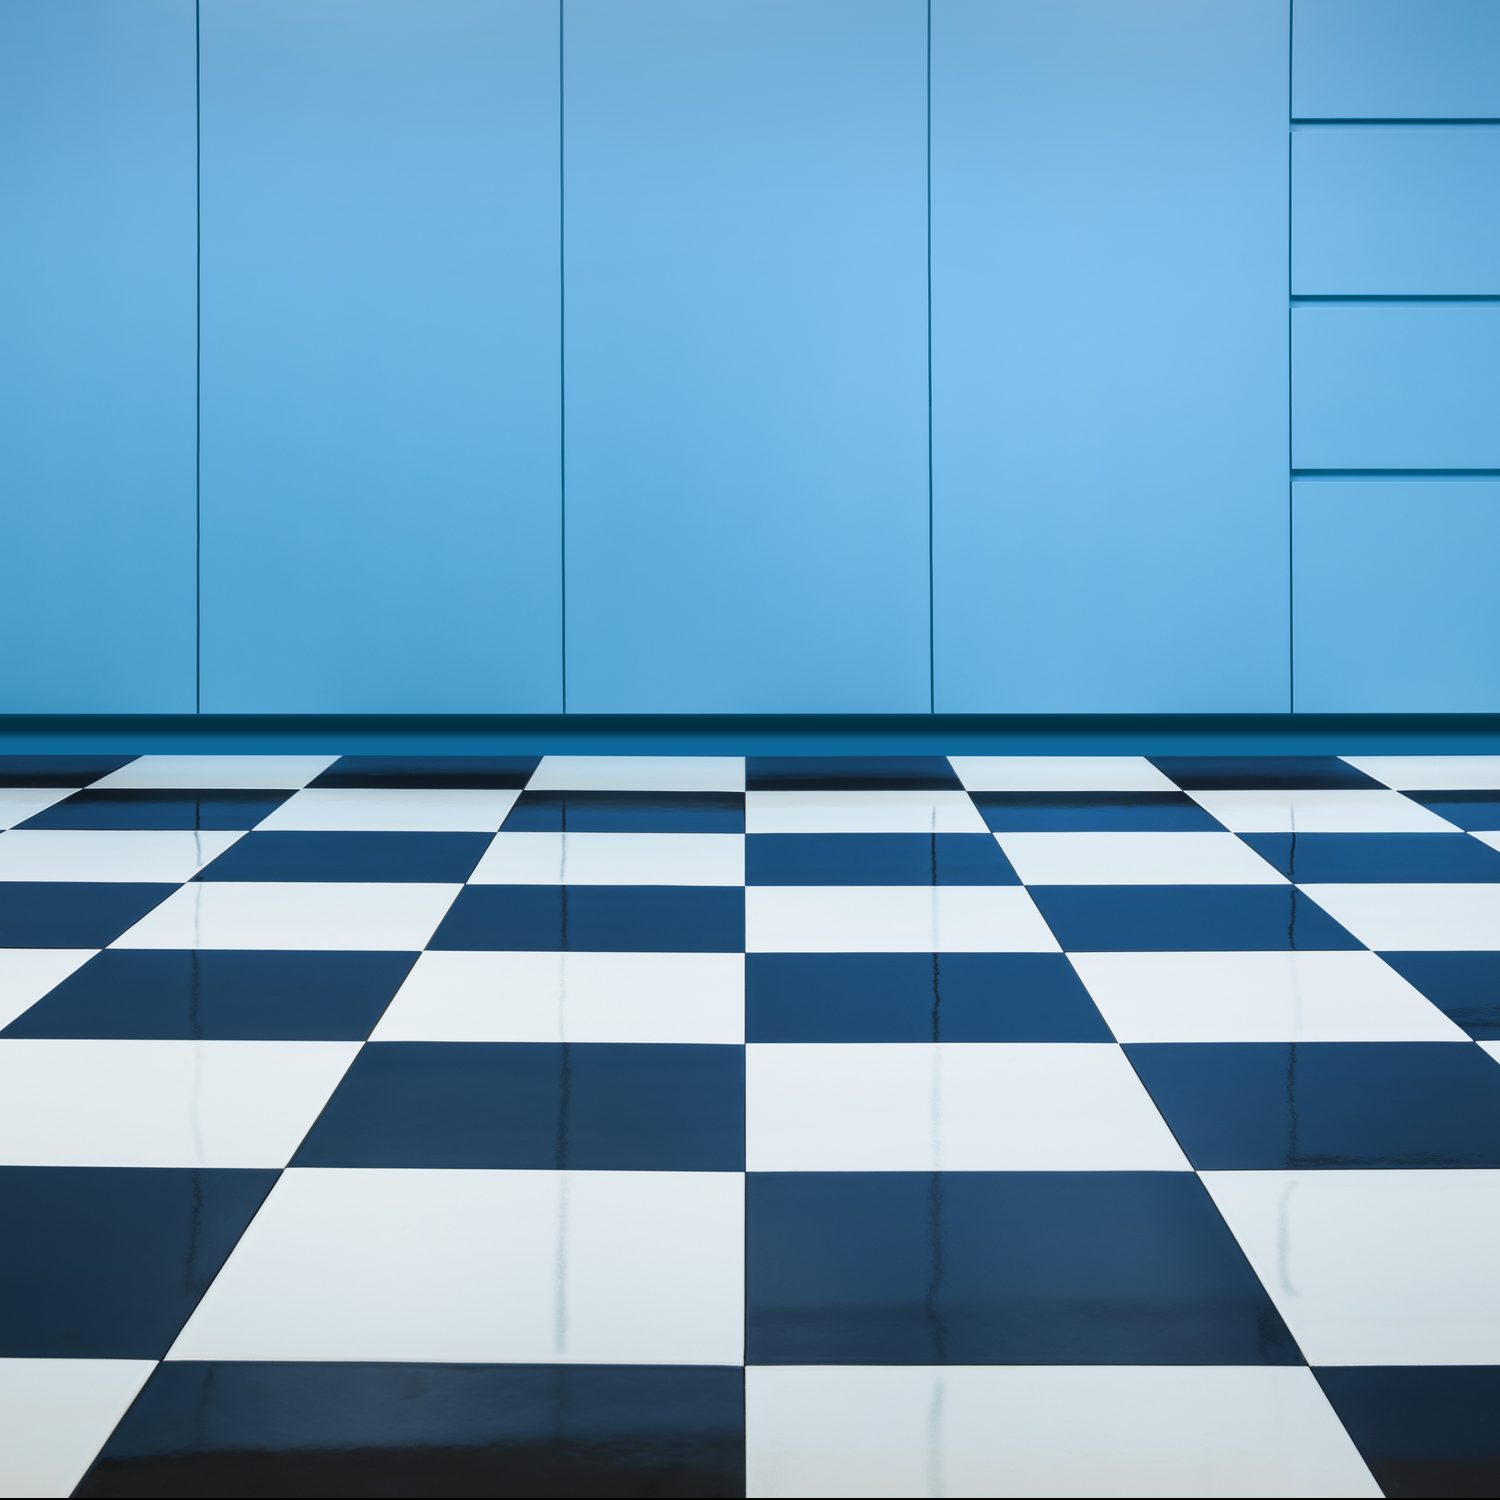 Black and white checkered floor